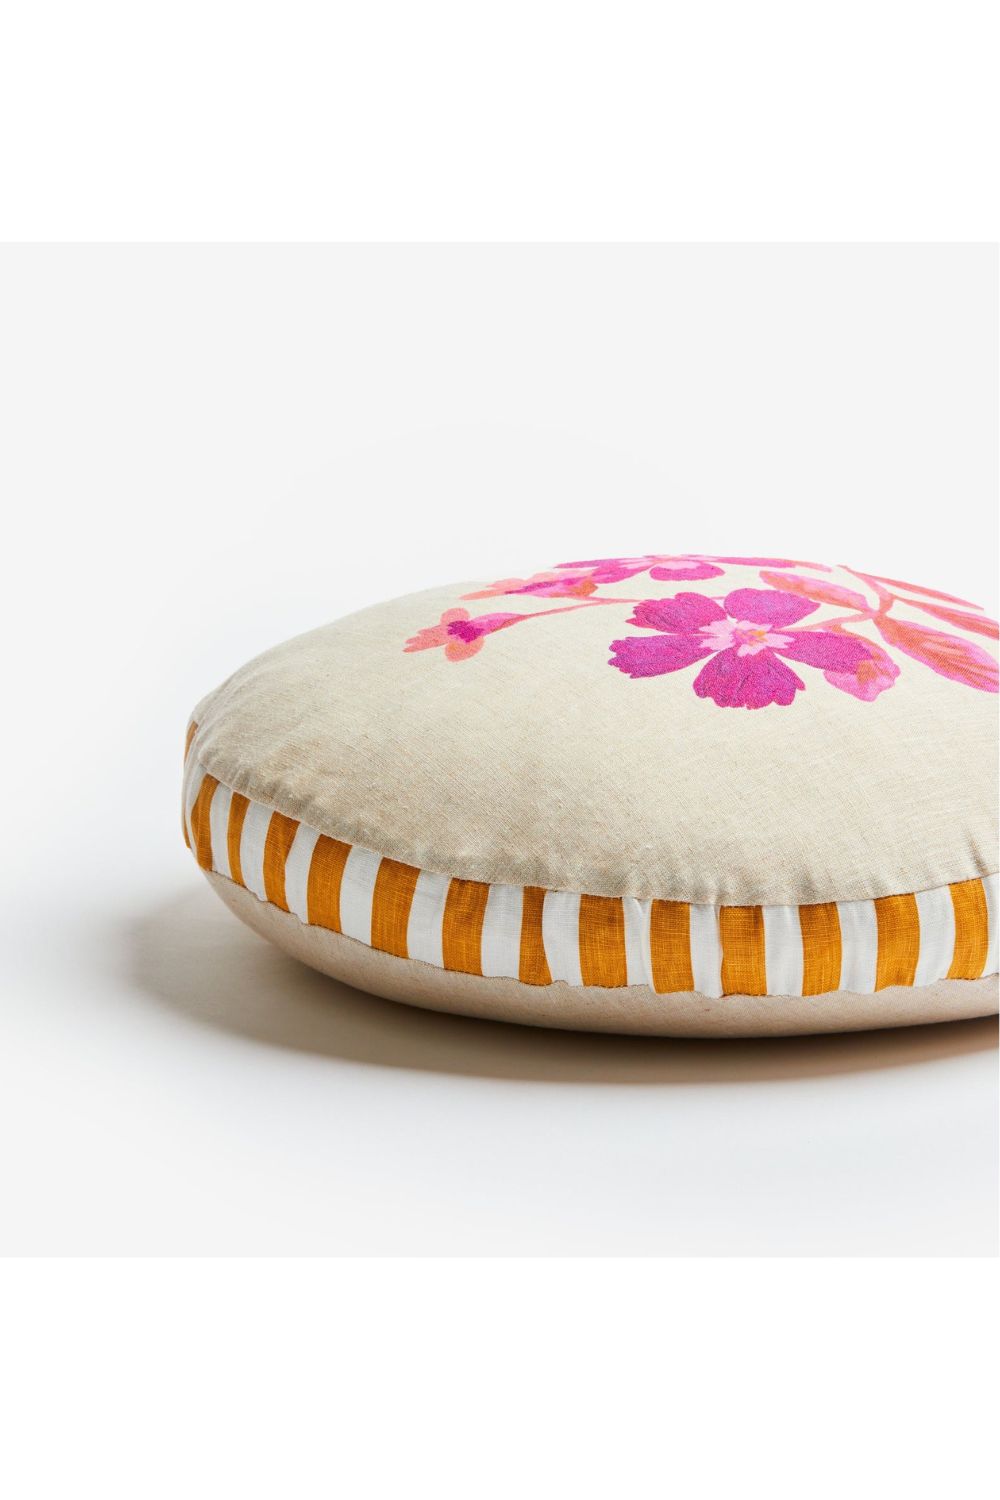 Bonnie & Neil Cosmos Pink 50cm Round Cushion